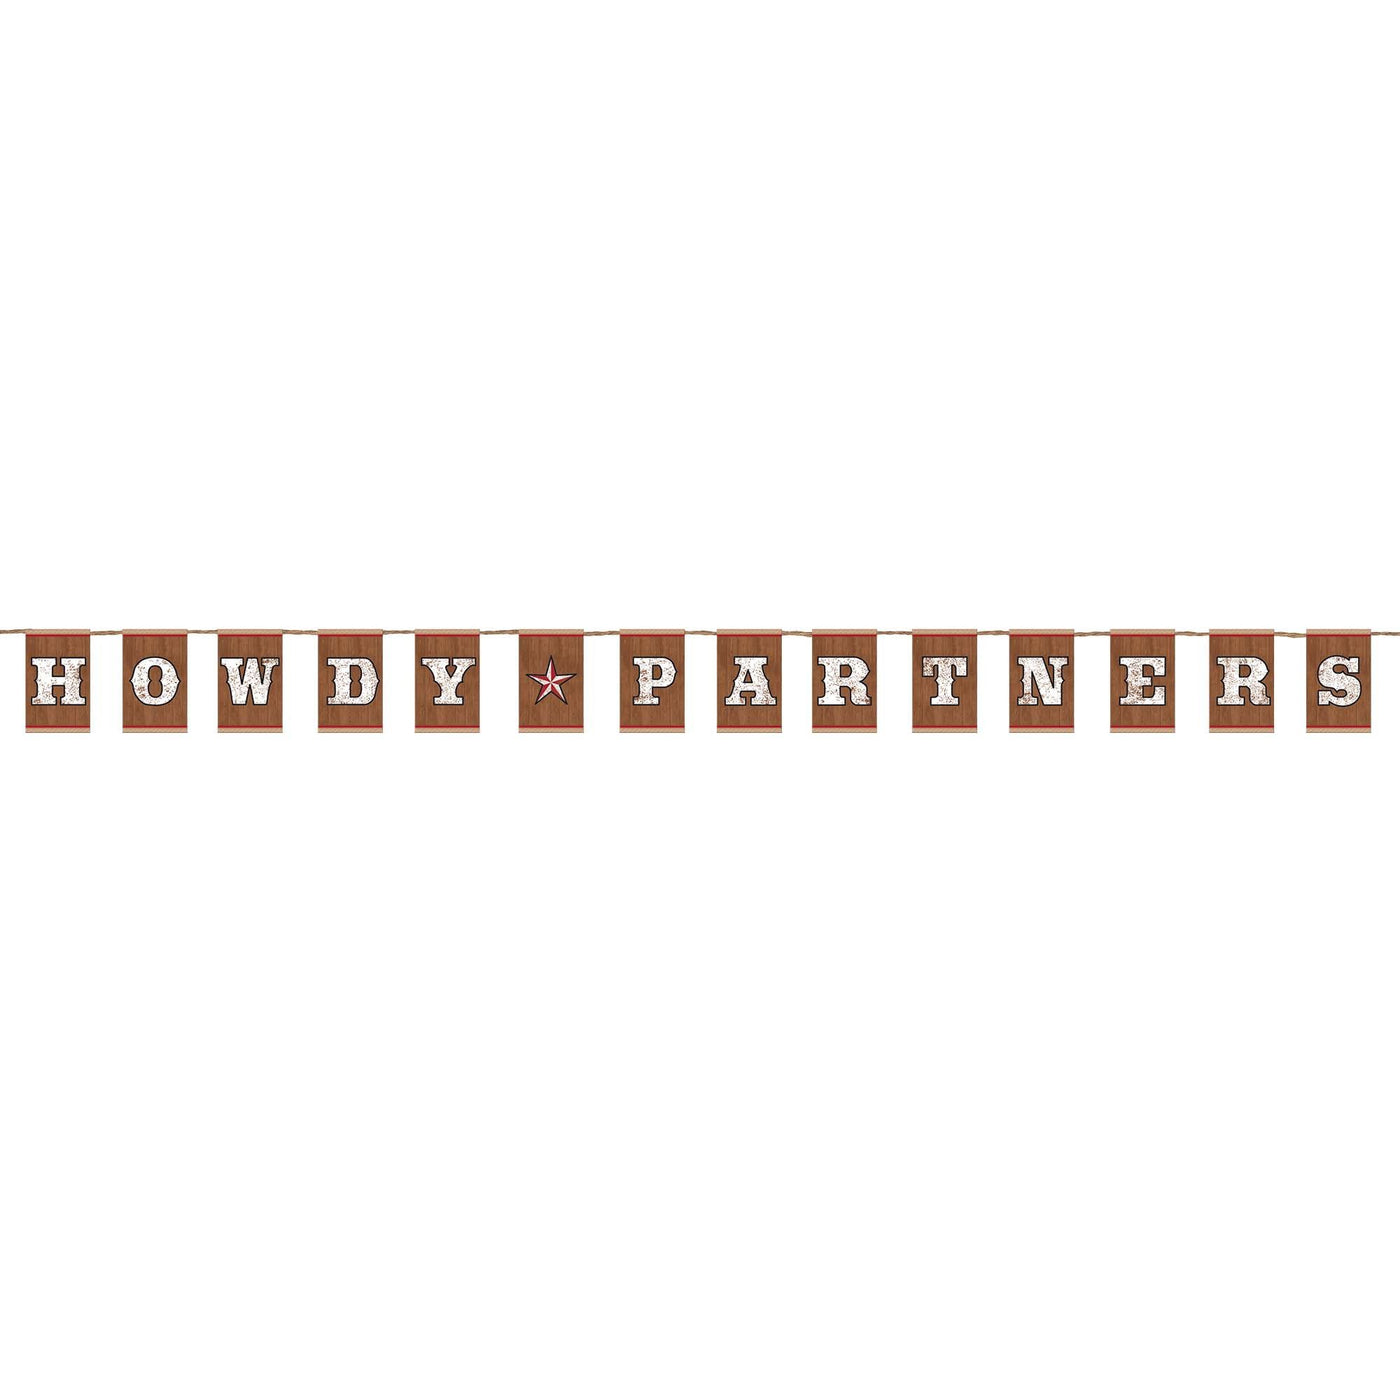 Western Letter Banner - Howdy Partners